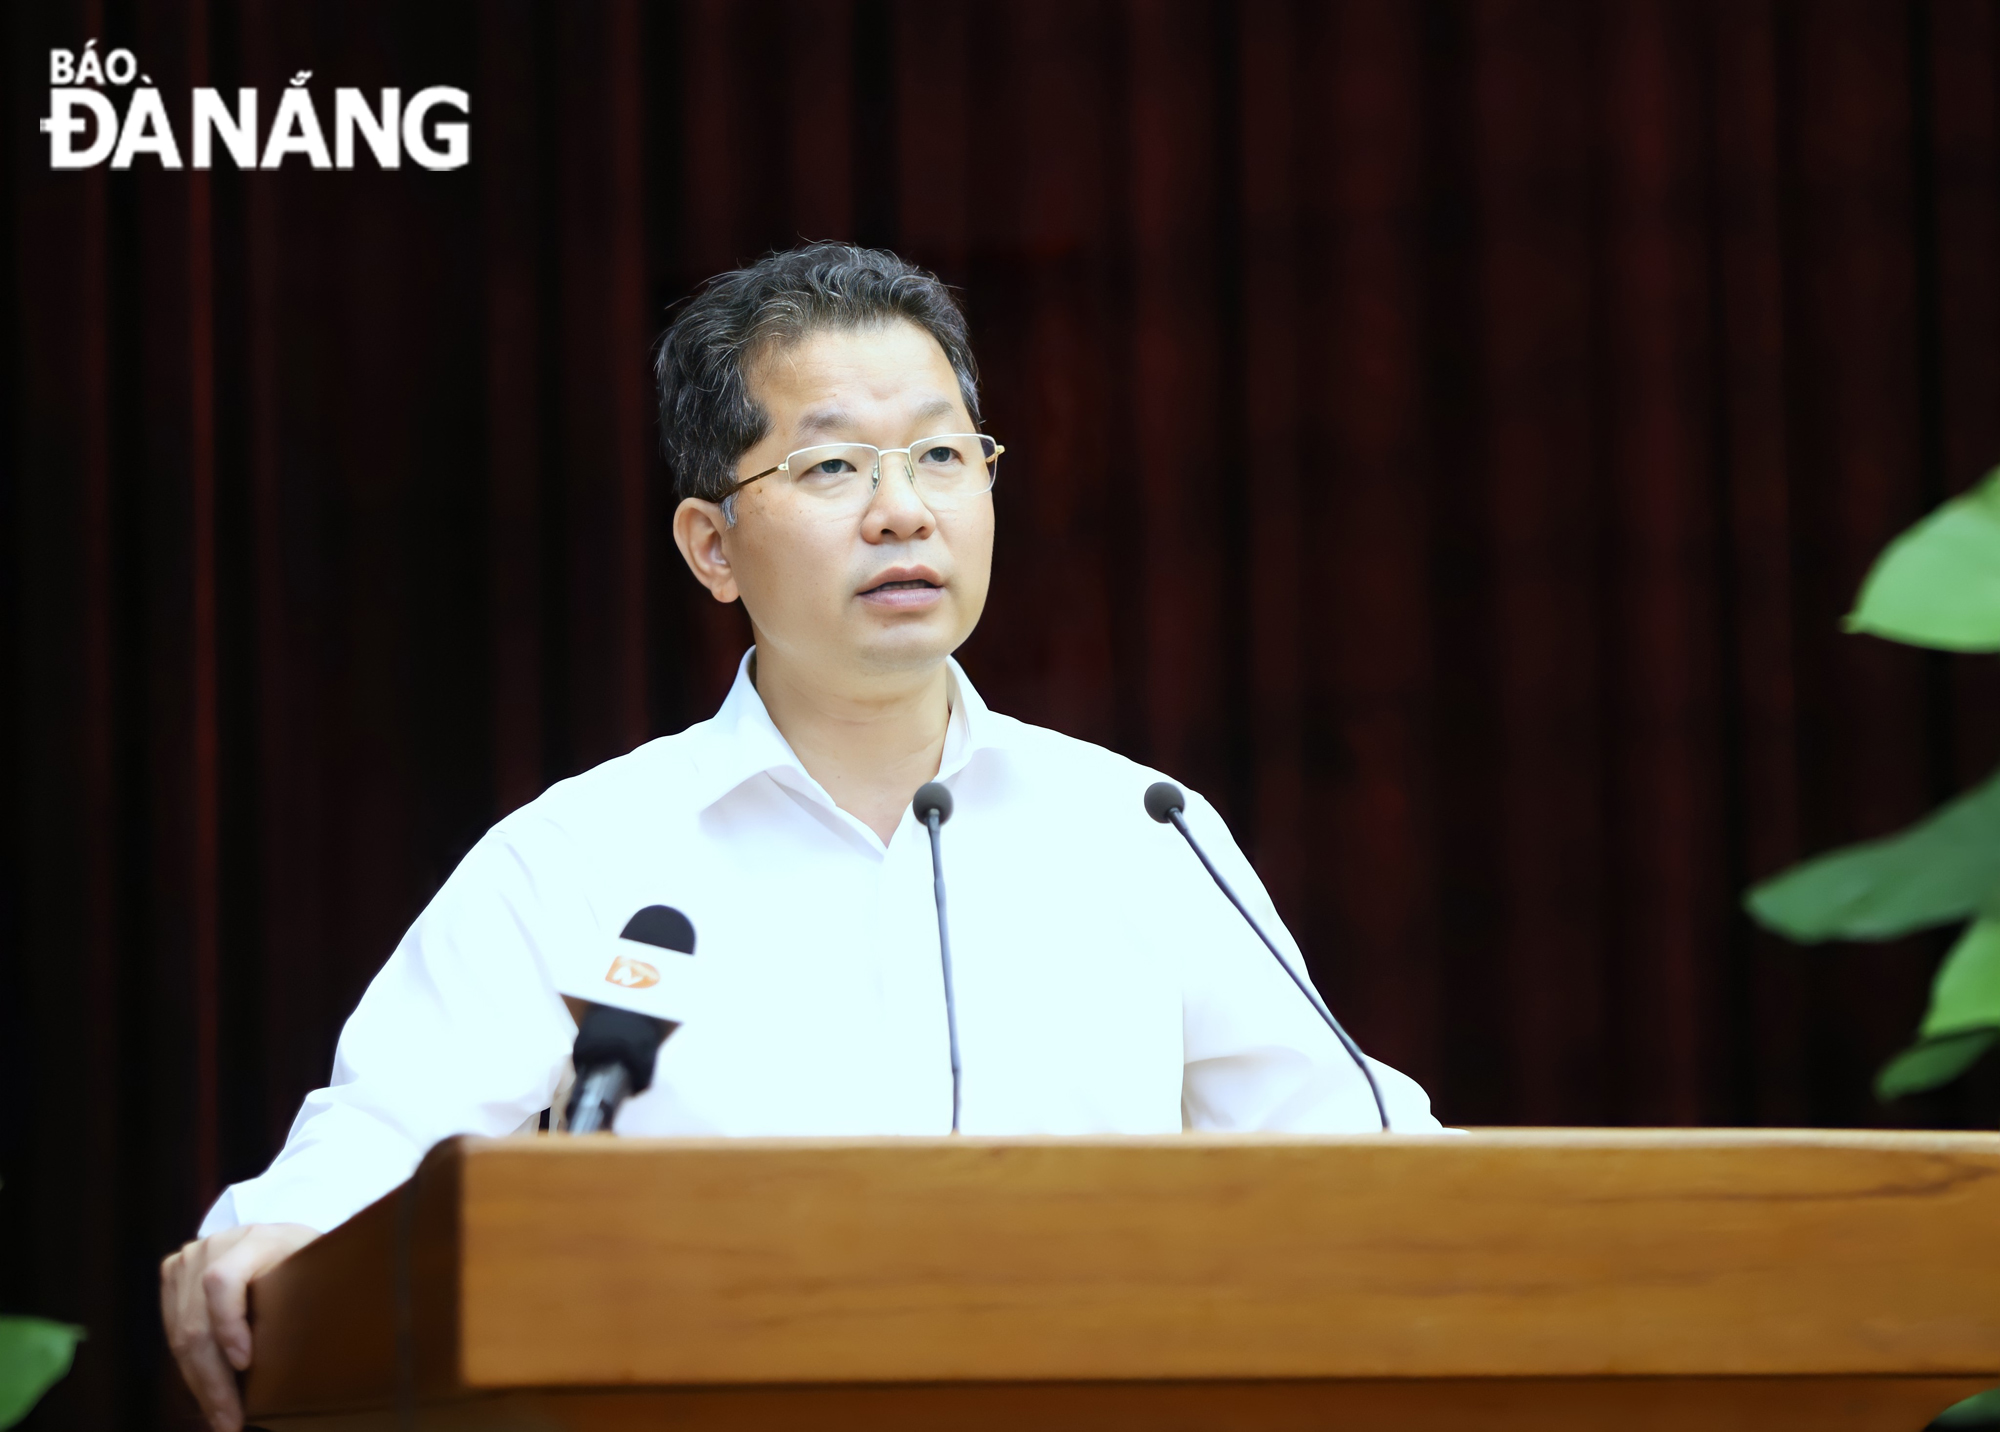 Da Nang Party Committee Secretary Nguyen Van Quang delivering his closing speech at the event. Photo: NGOC PHU